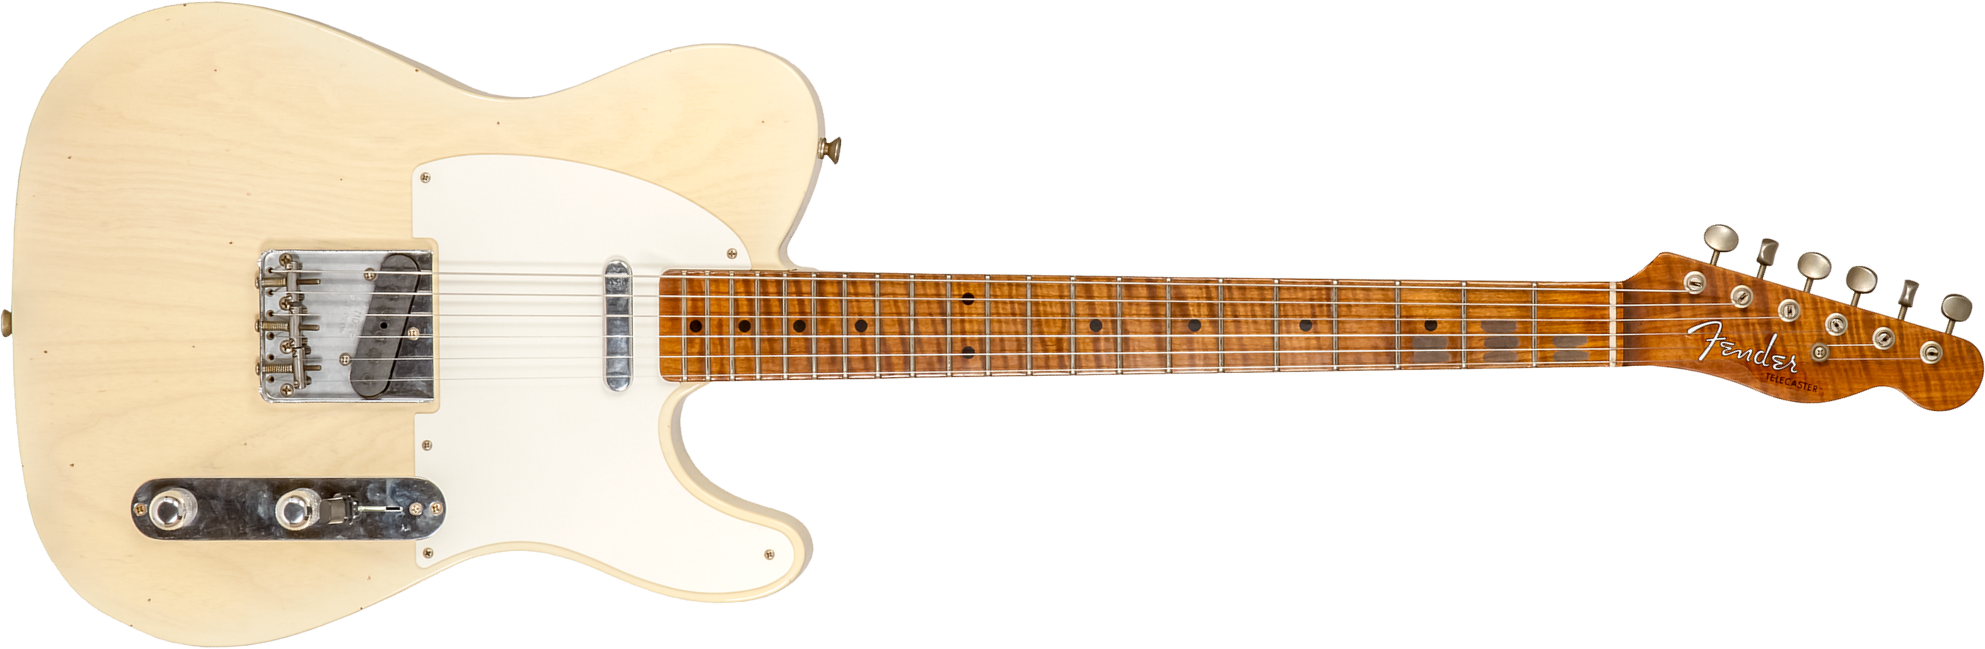 Fender Custom Shop Tele 1955 2s Ht Mn #cz573416 - Journeyman Relic Nocaster Blonde - Tel shape electric guitar - Main picture